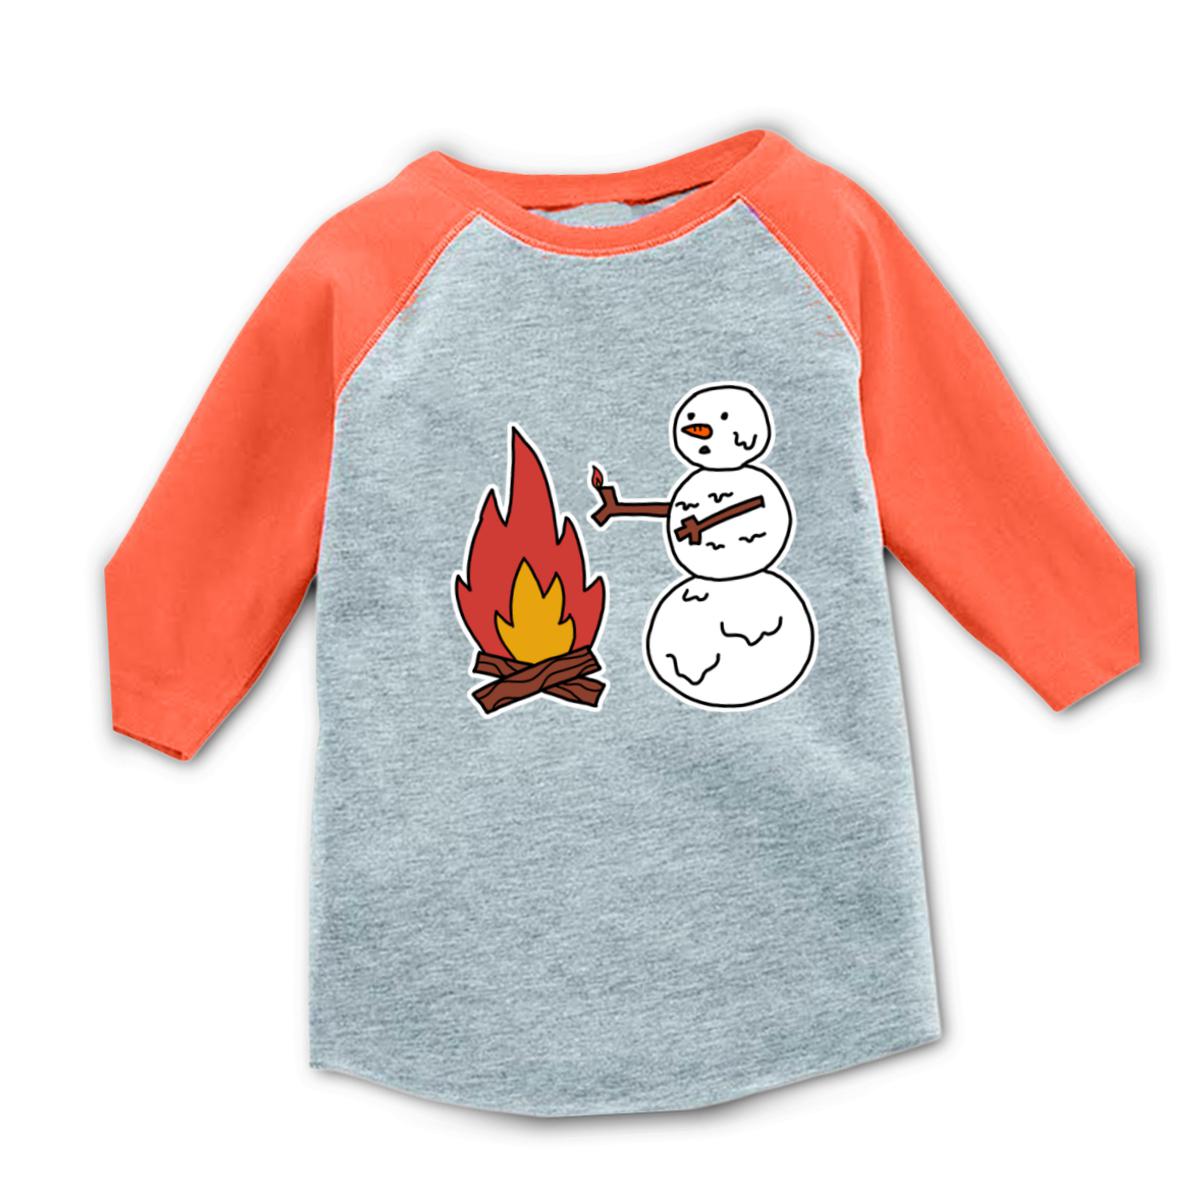 Snowman Keeping Warm Toddler Raglan Tee 4T heather-orange